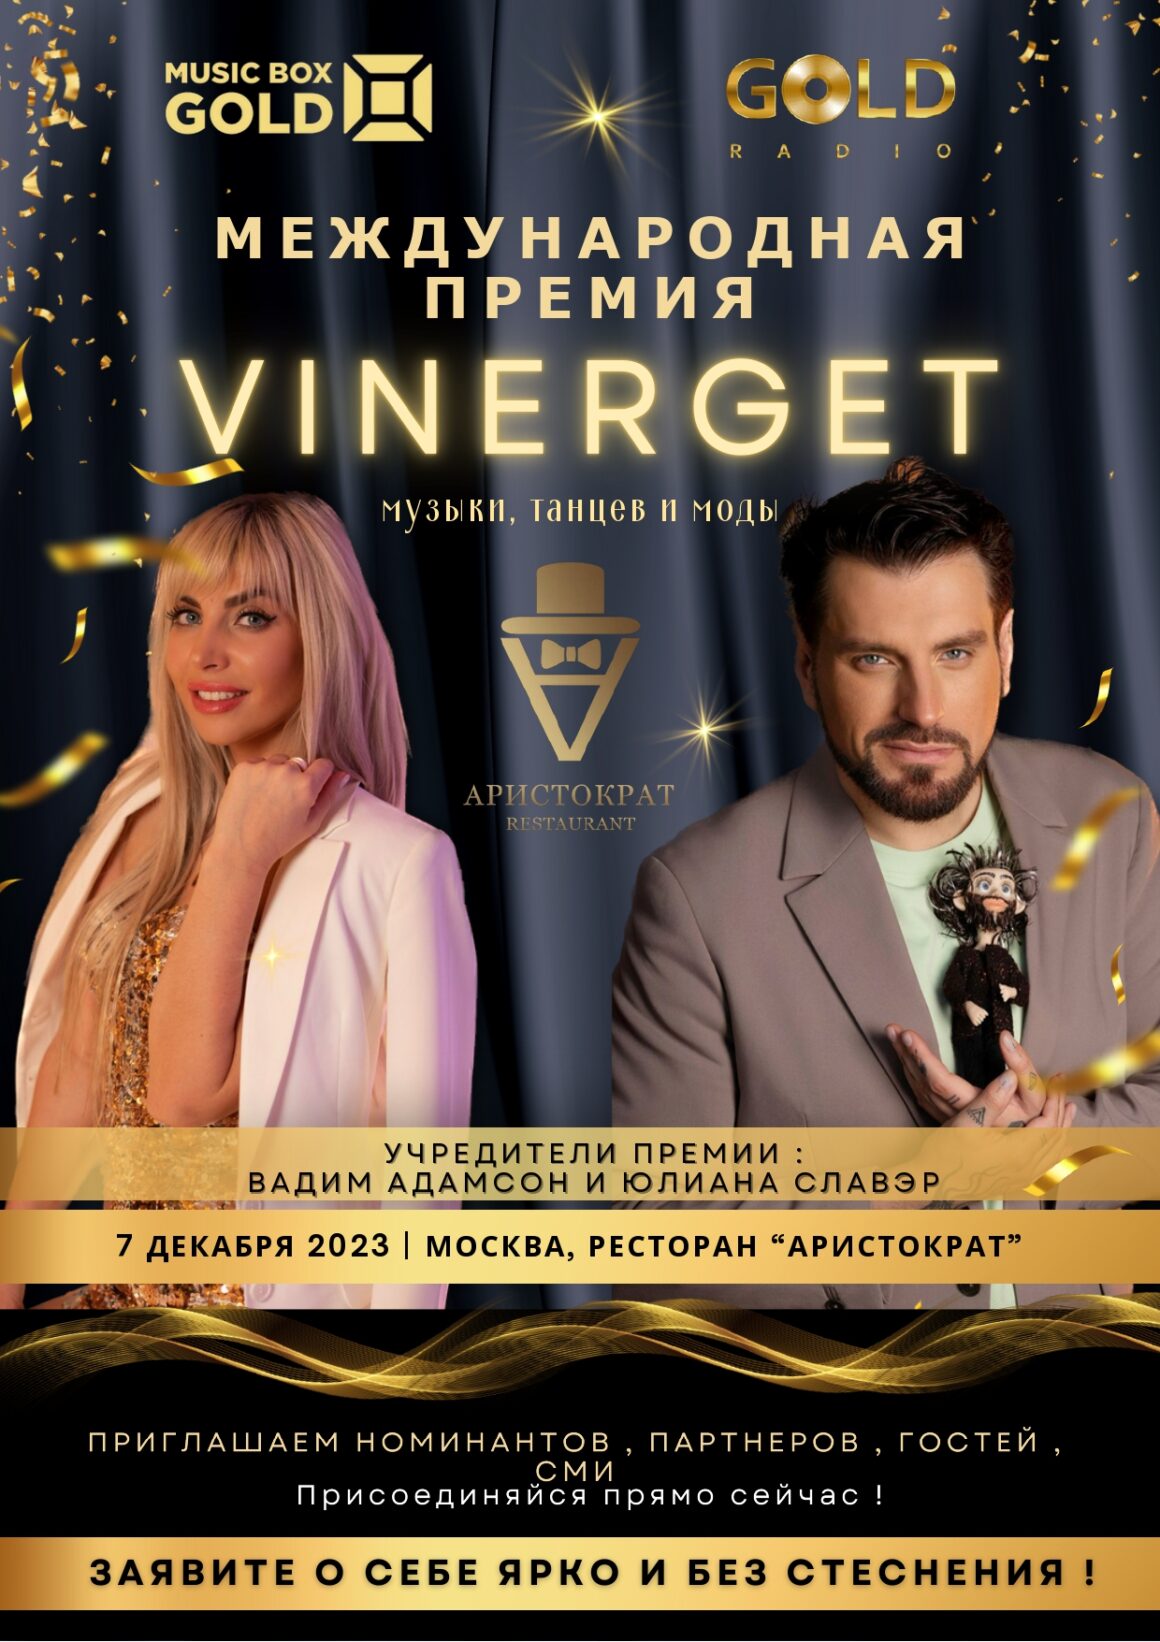 Вадим Адамсон и Юлиана Славэр приглашают на Премию VINERGET 2023 - Музыки, танцев и моды.